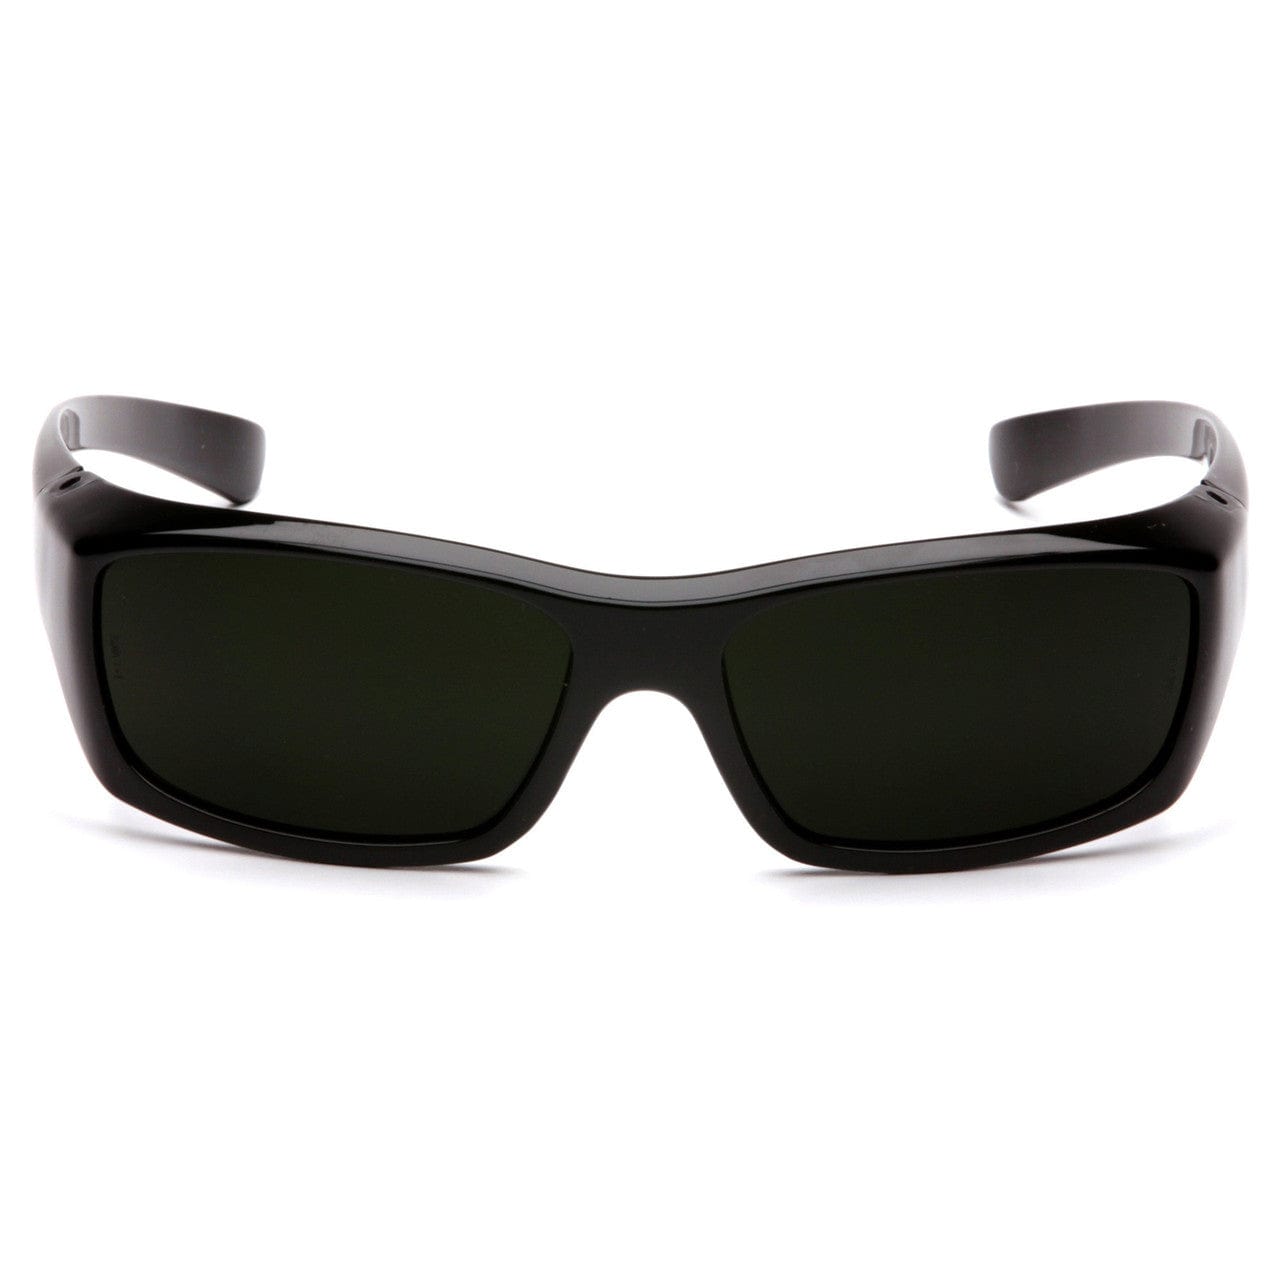 Pyramex Emerge Safety Glasses Black Frame IR Shade 5.0 Lens SB7950SF Front